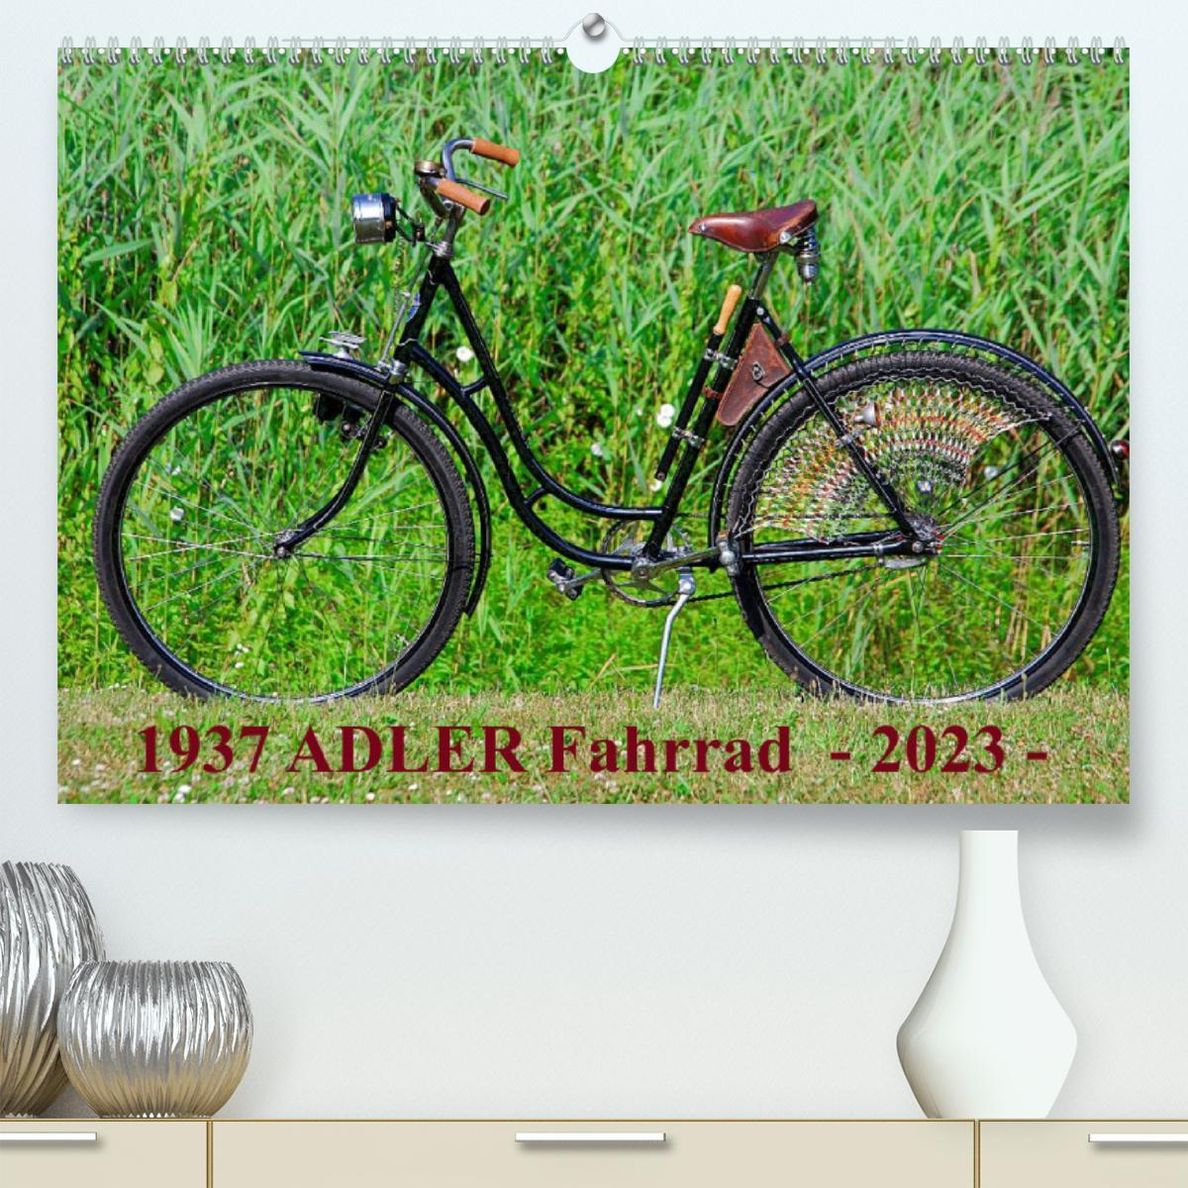 1937 ADLER Fahrrad Premium, hochwertiger DIN A2 Wandkalender 2023,  Kunstdruck in Hochglanz - Kalender bestellen